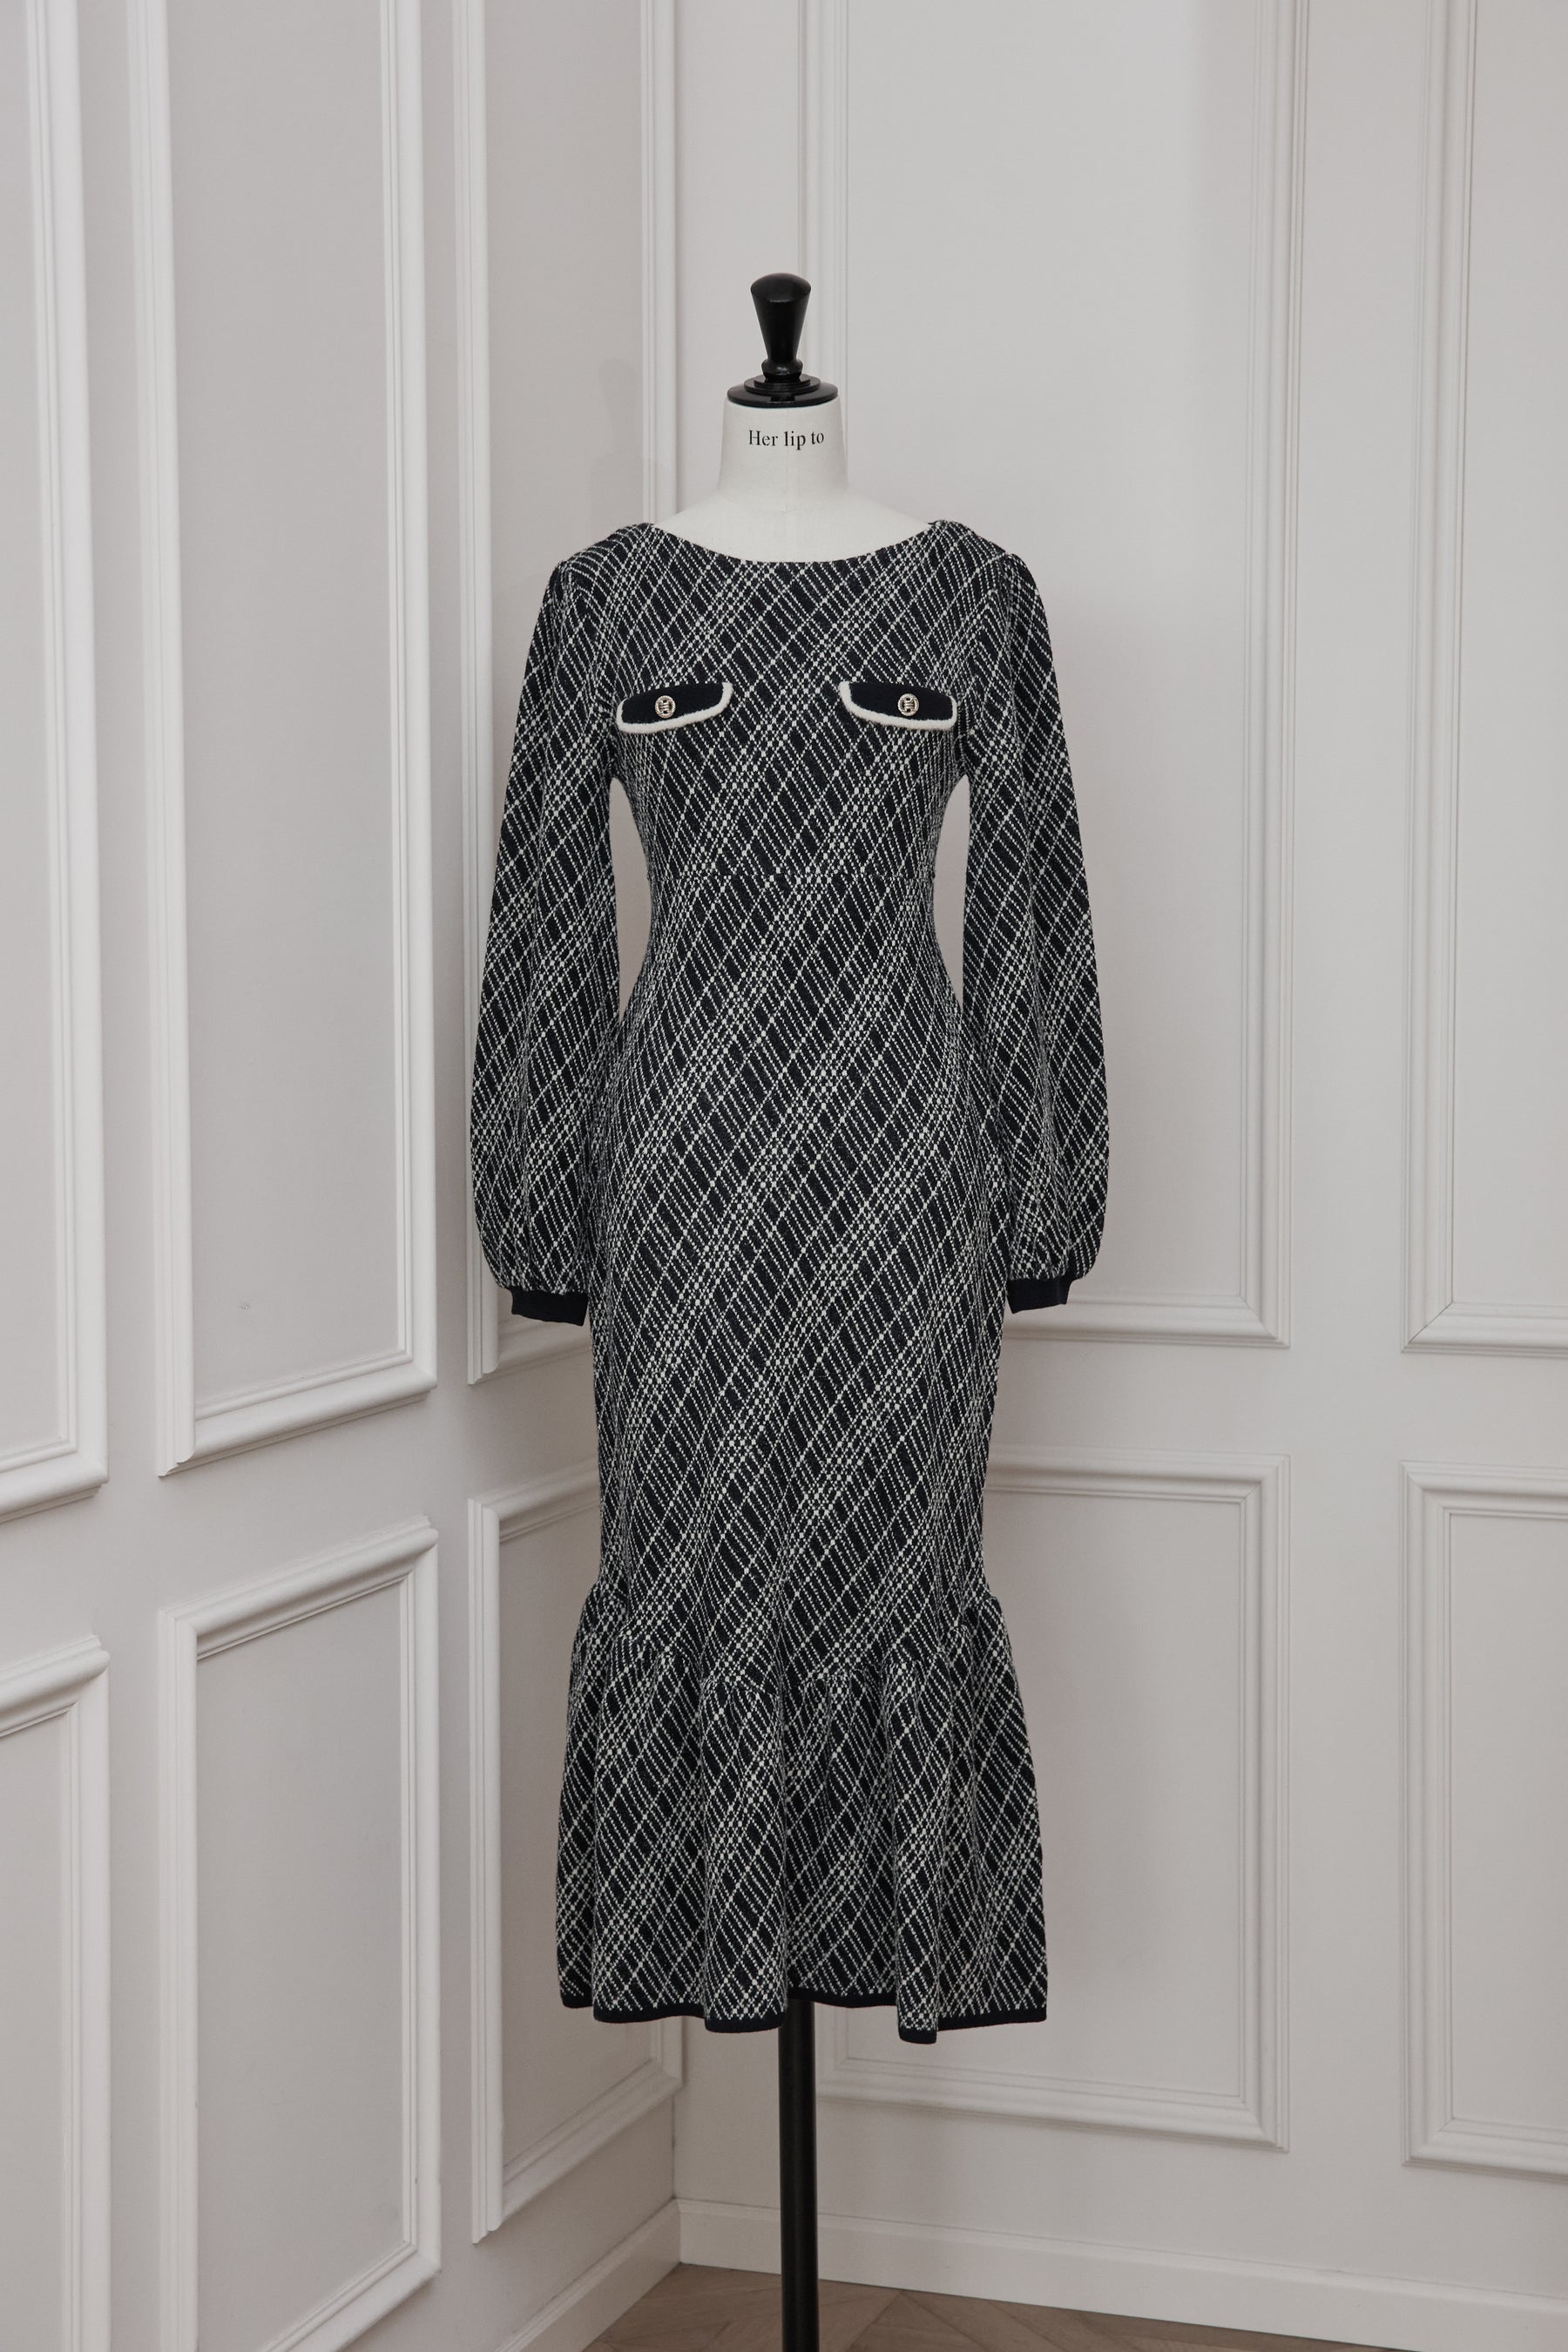 -----Herlipto Vosges Jacquard Knit Dress